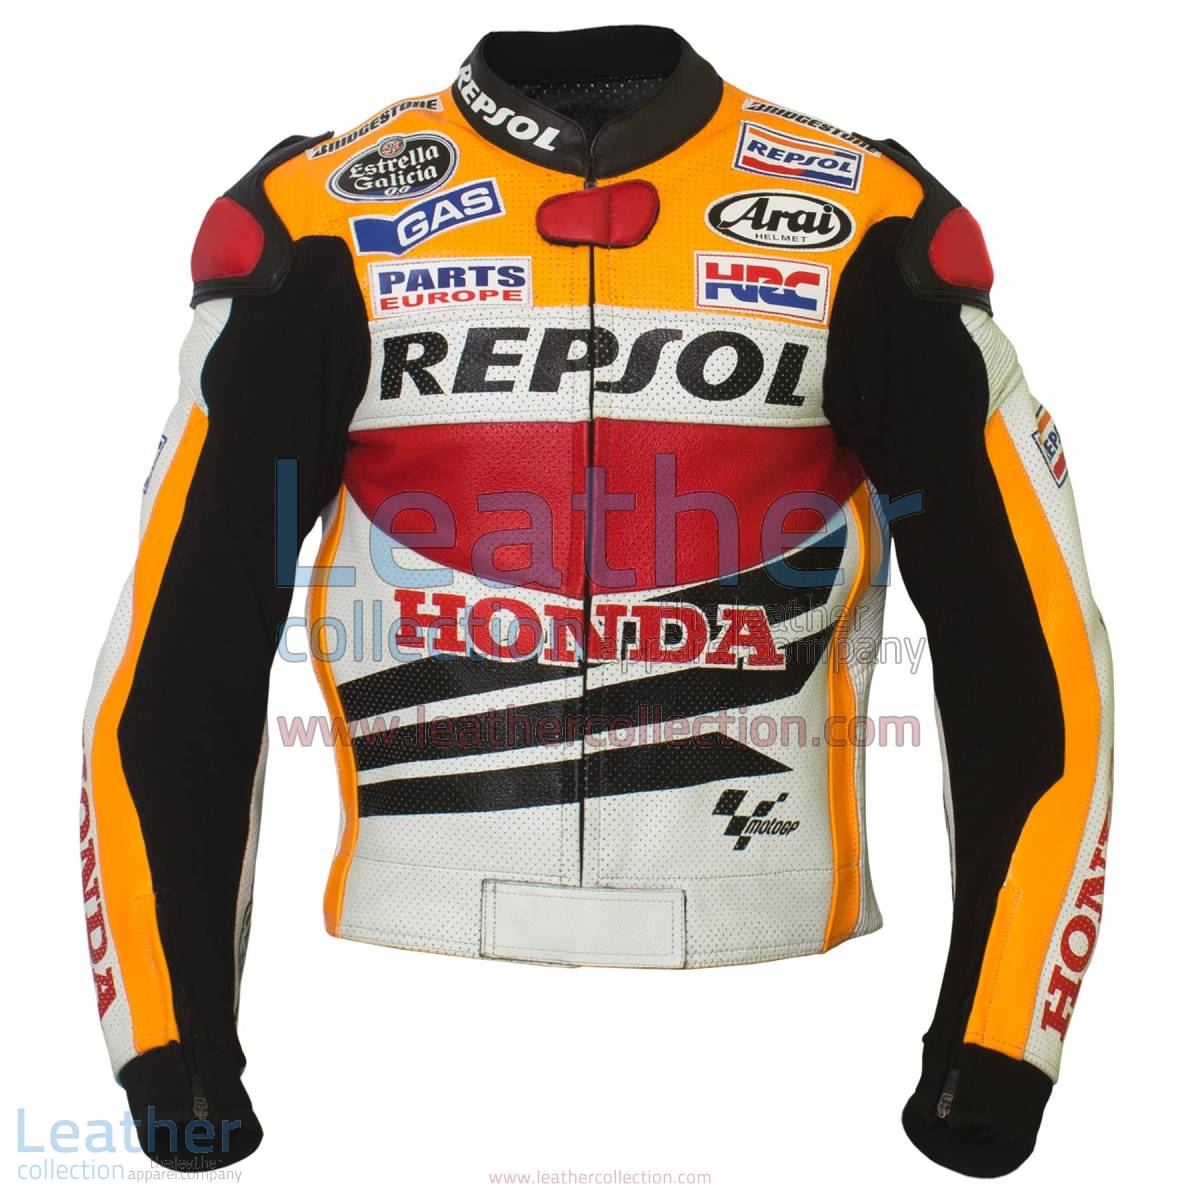 Dani Pedrosa Honda Repsol 2013 Motorcycle Jacket | motorcycle jacket,Honda Repsol jacket